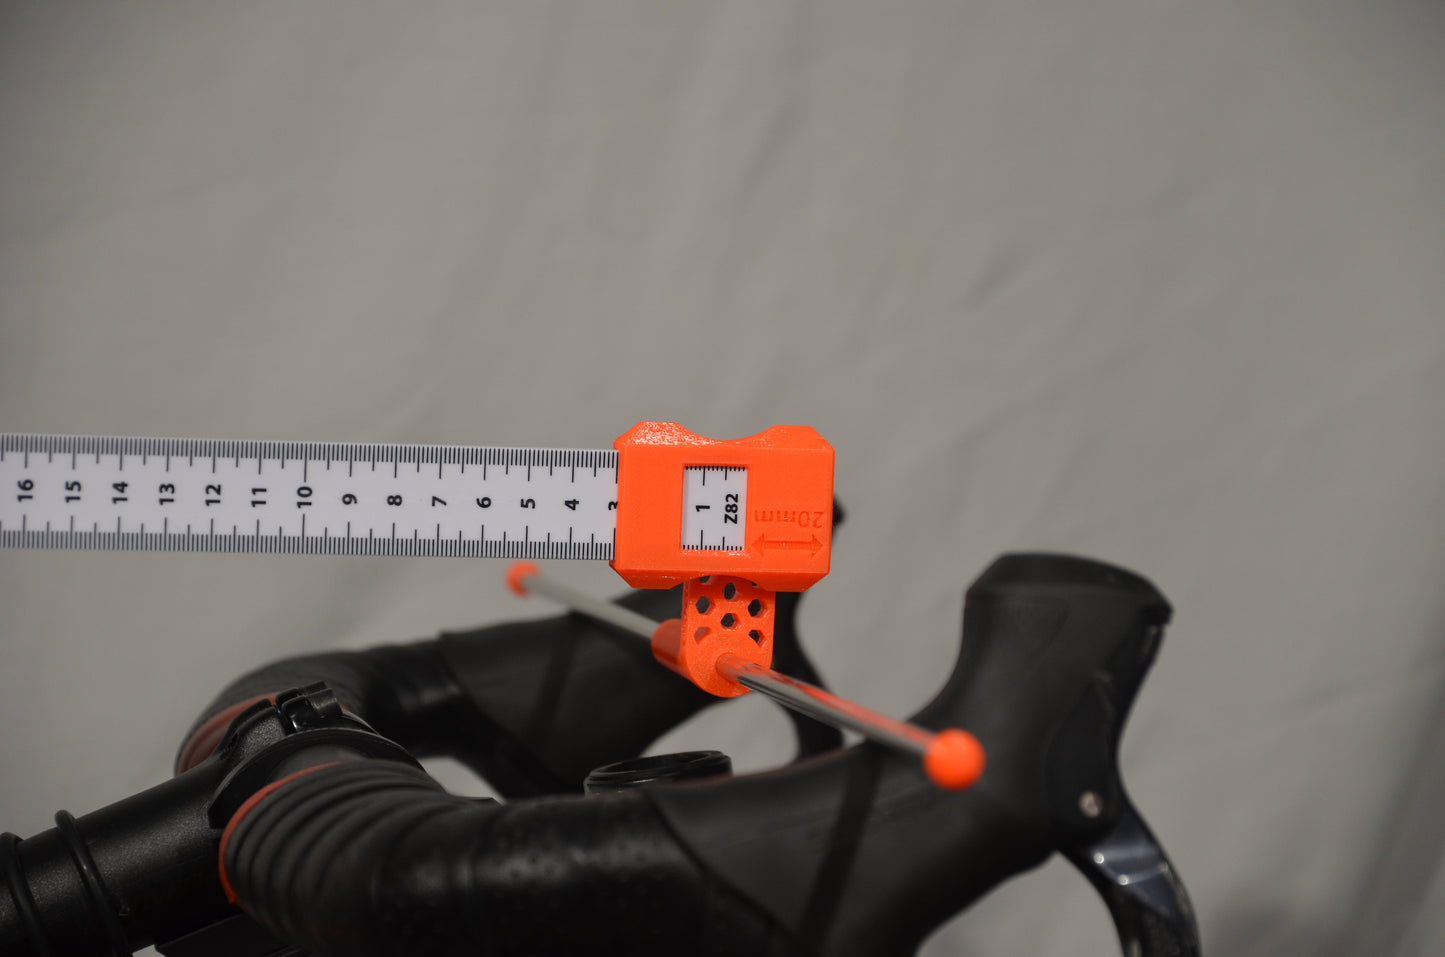 V4/5 to V6 UPGRADE KIT for Bike setup and measurement tool